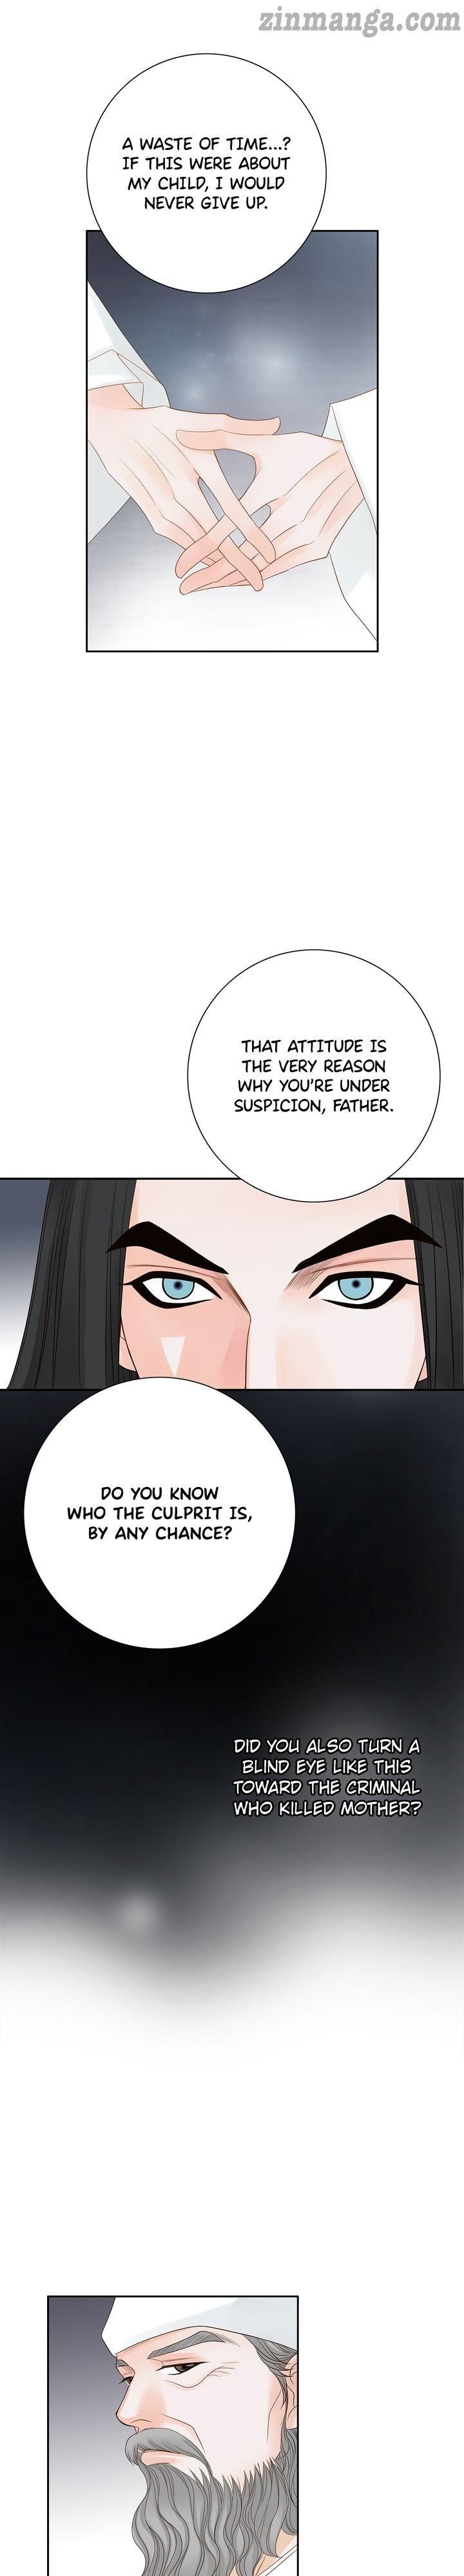 The Secret Queen - Page 3